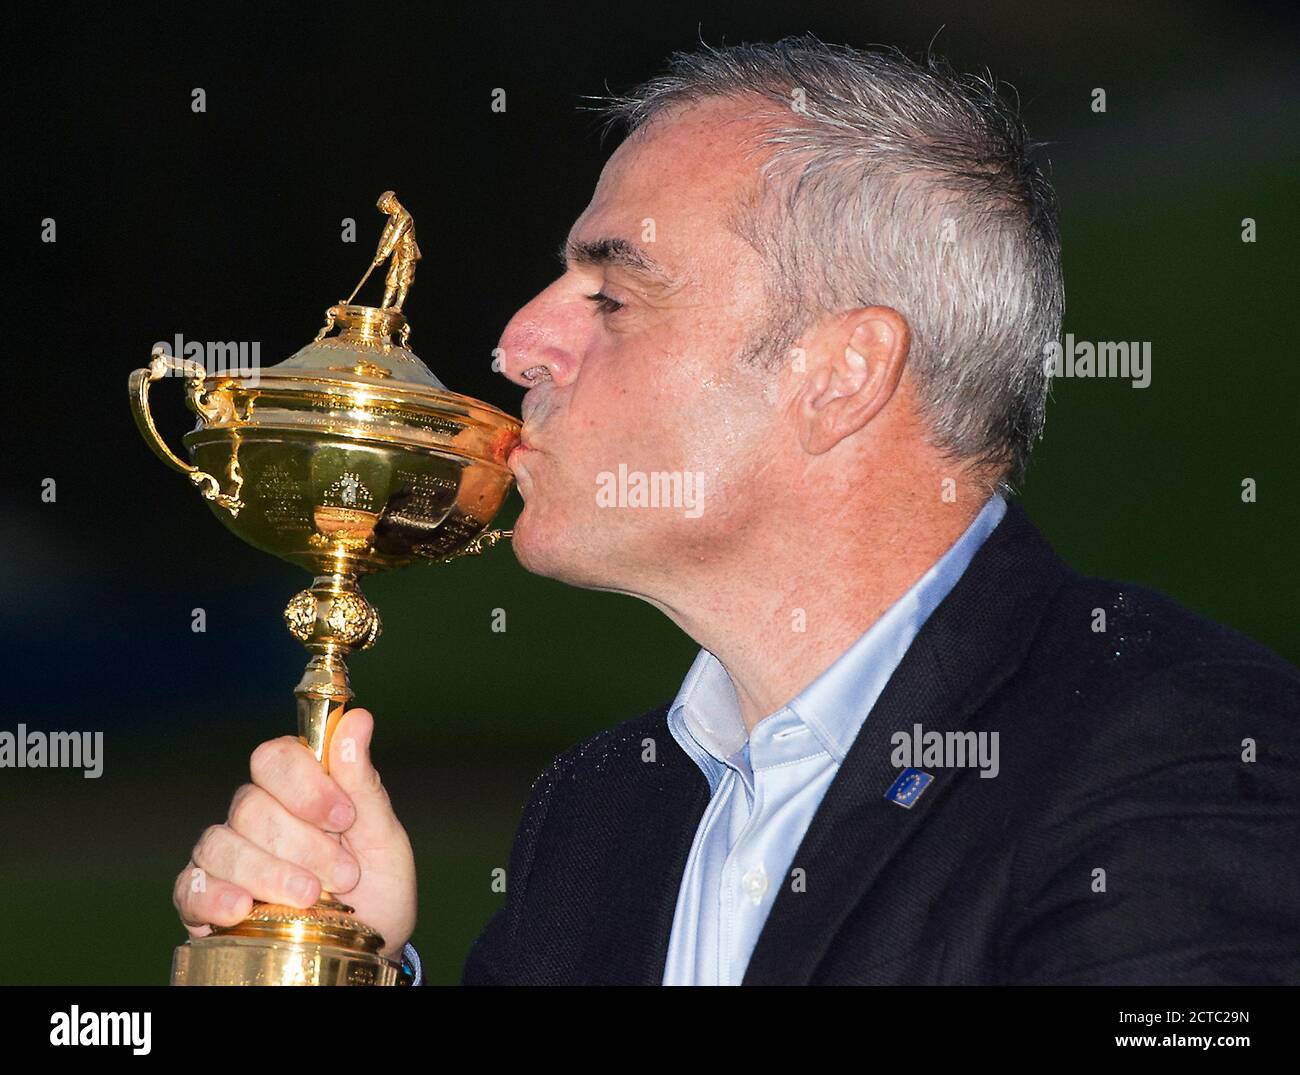 Paul McGinley küsst den Ryder Cup. 2014 Ryder Cup, Gleneagles. Bild-Kredit : © MARK PAIN / ALAMY STOCK FOTO Stockfoto